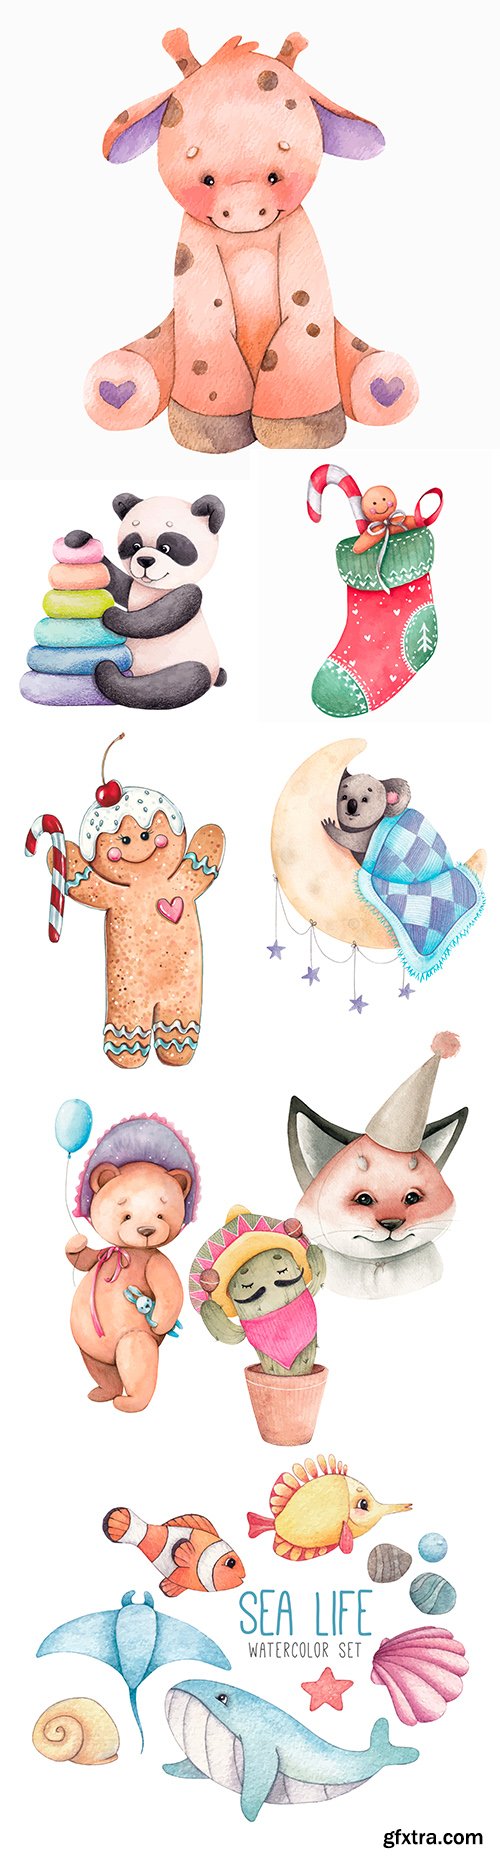 Watercolor illustrations cute cartoon animals in different caps
